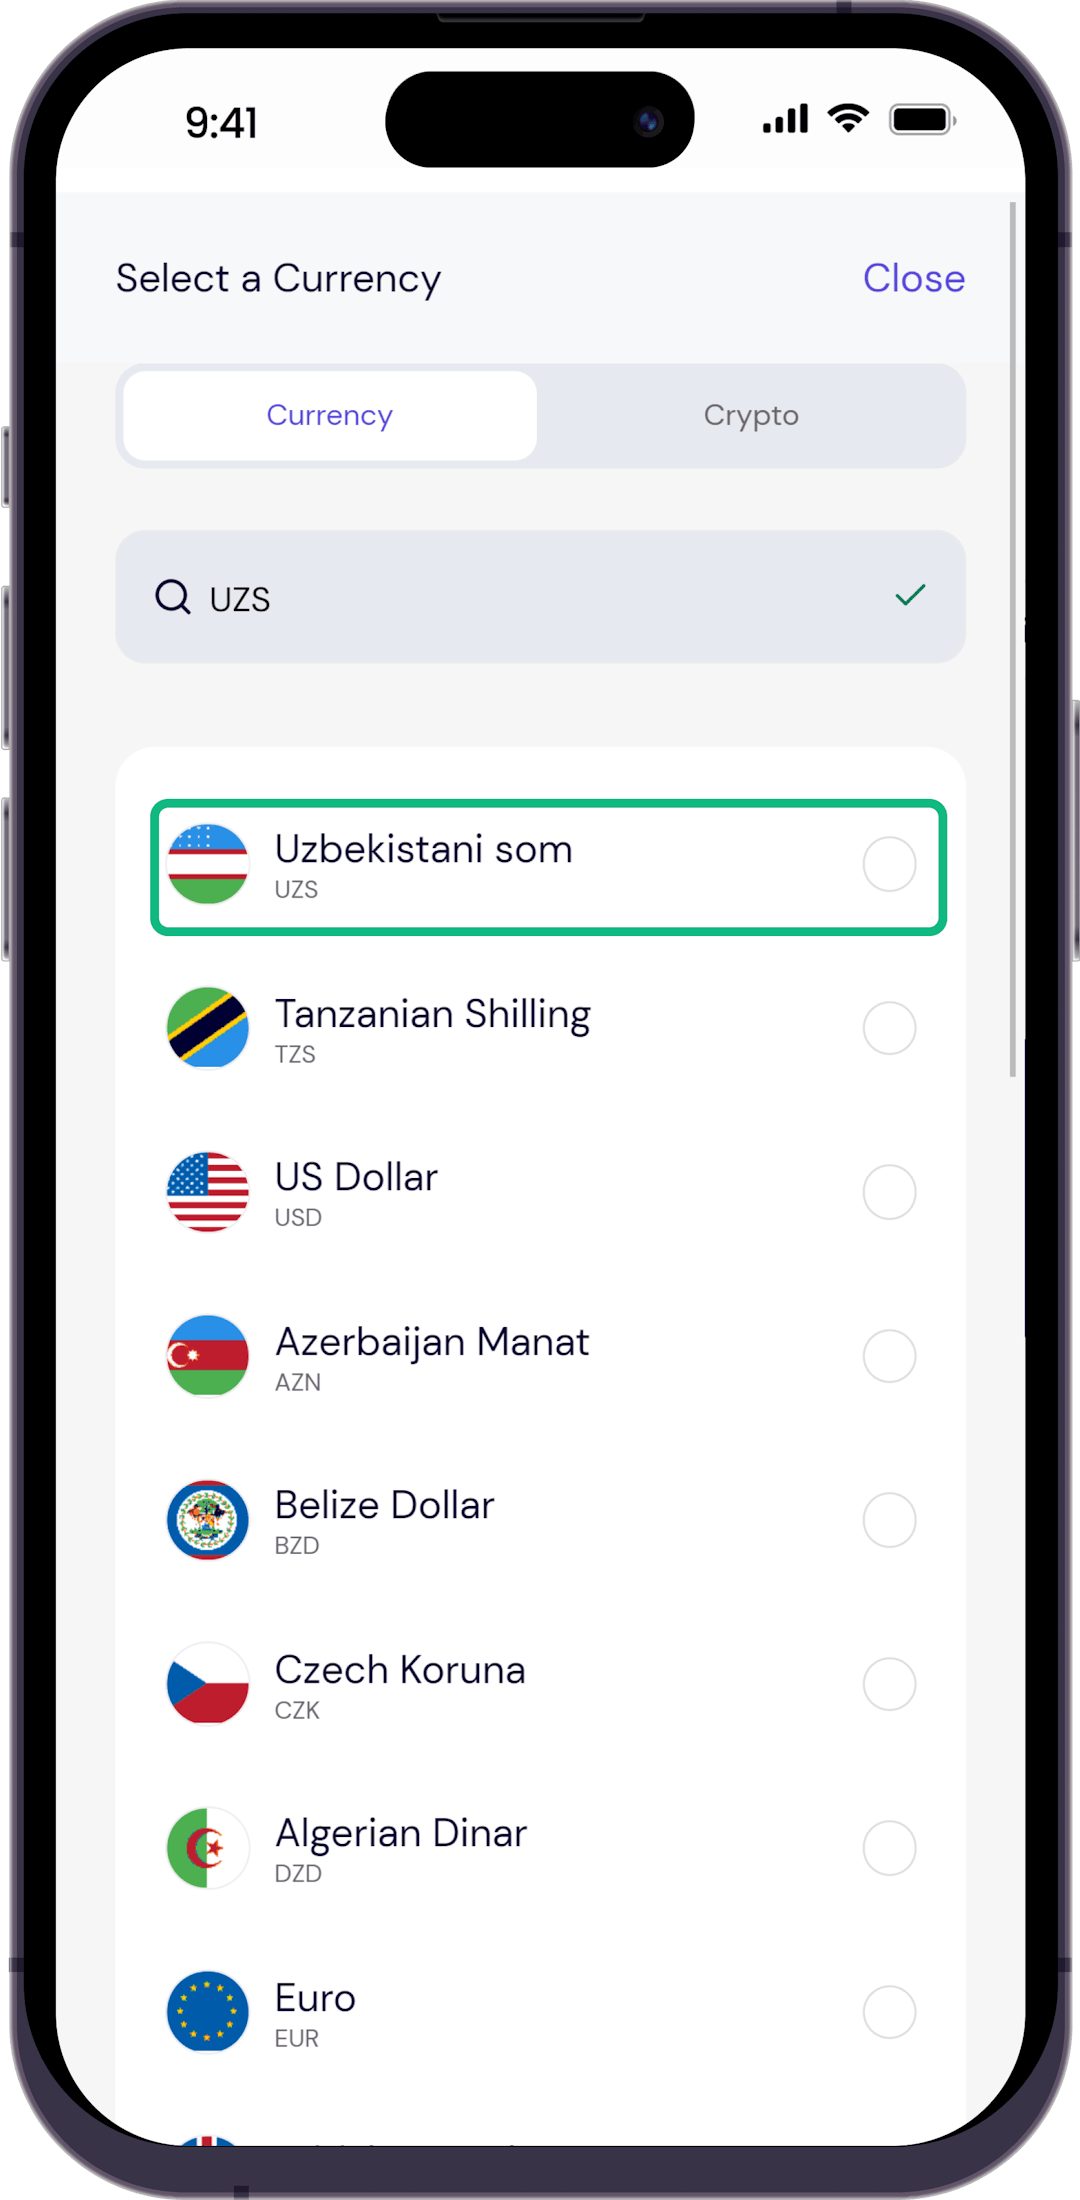 Step 3 - Search for Uzbekistani Som